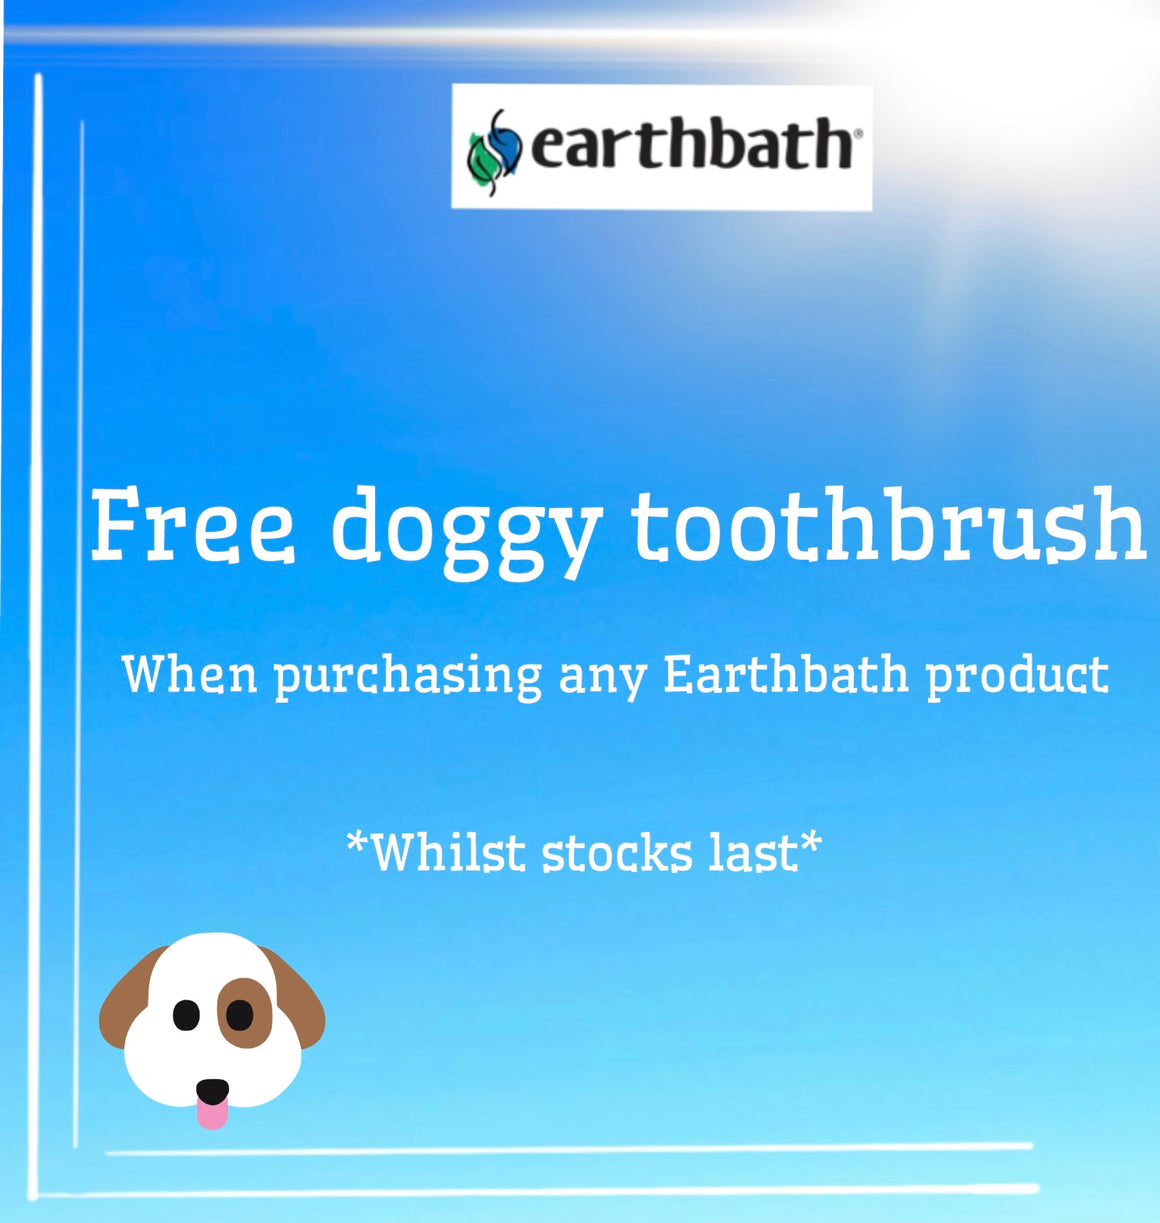 Dirty Dog Shampoo Earthbath - Sweet Orange Oil 472ml